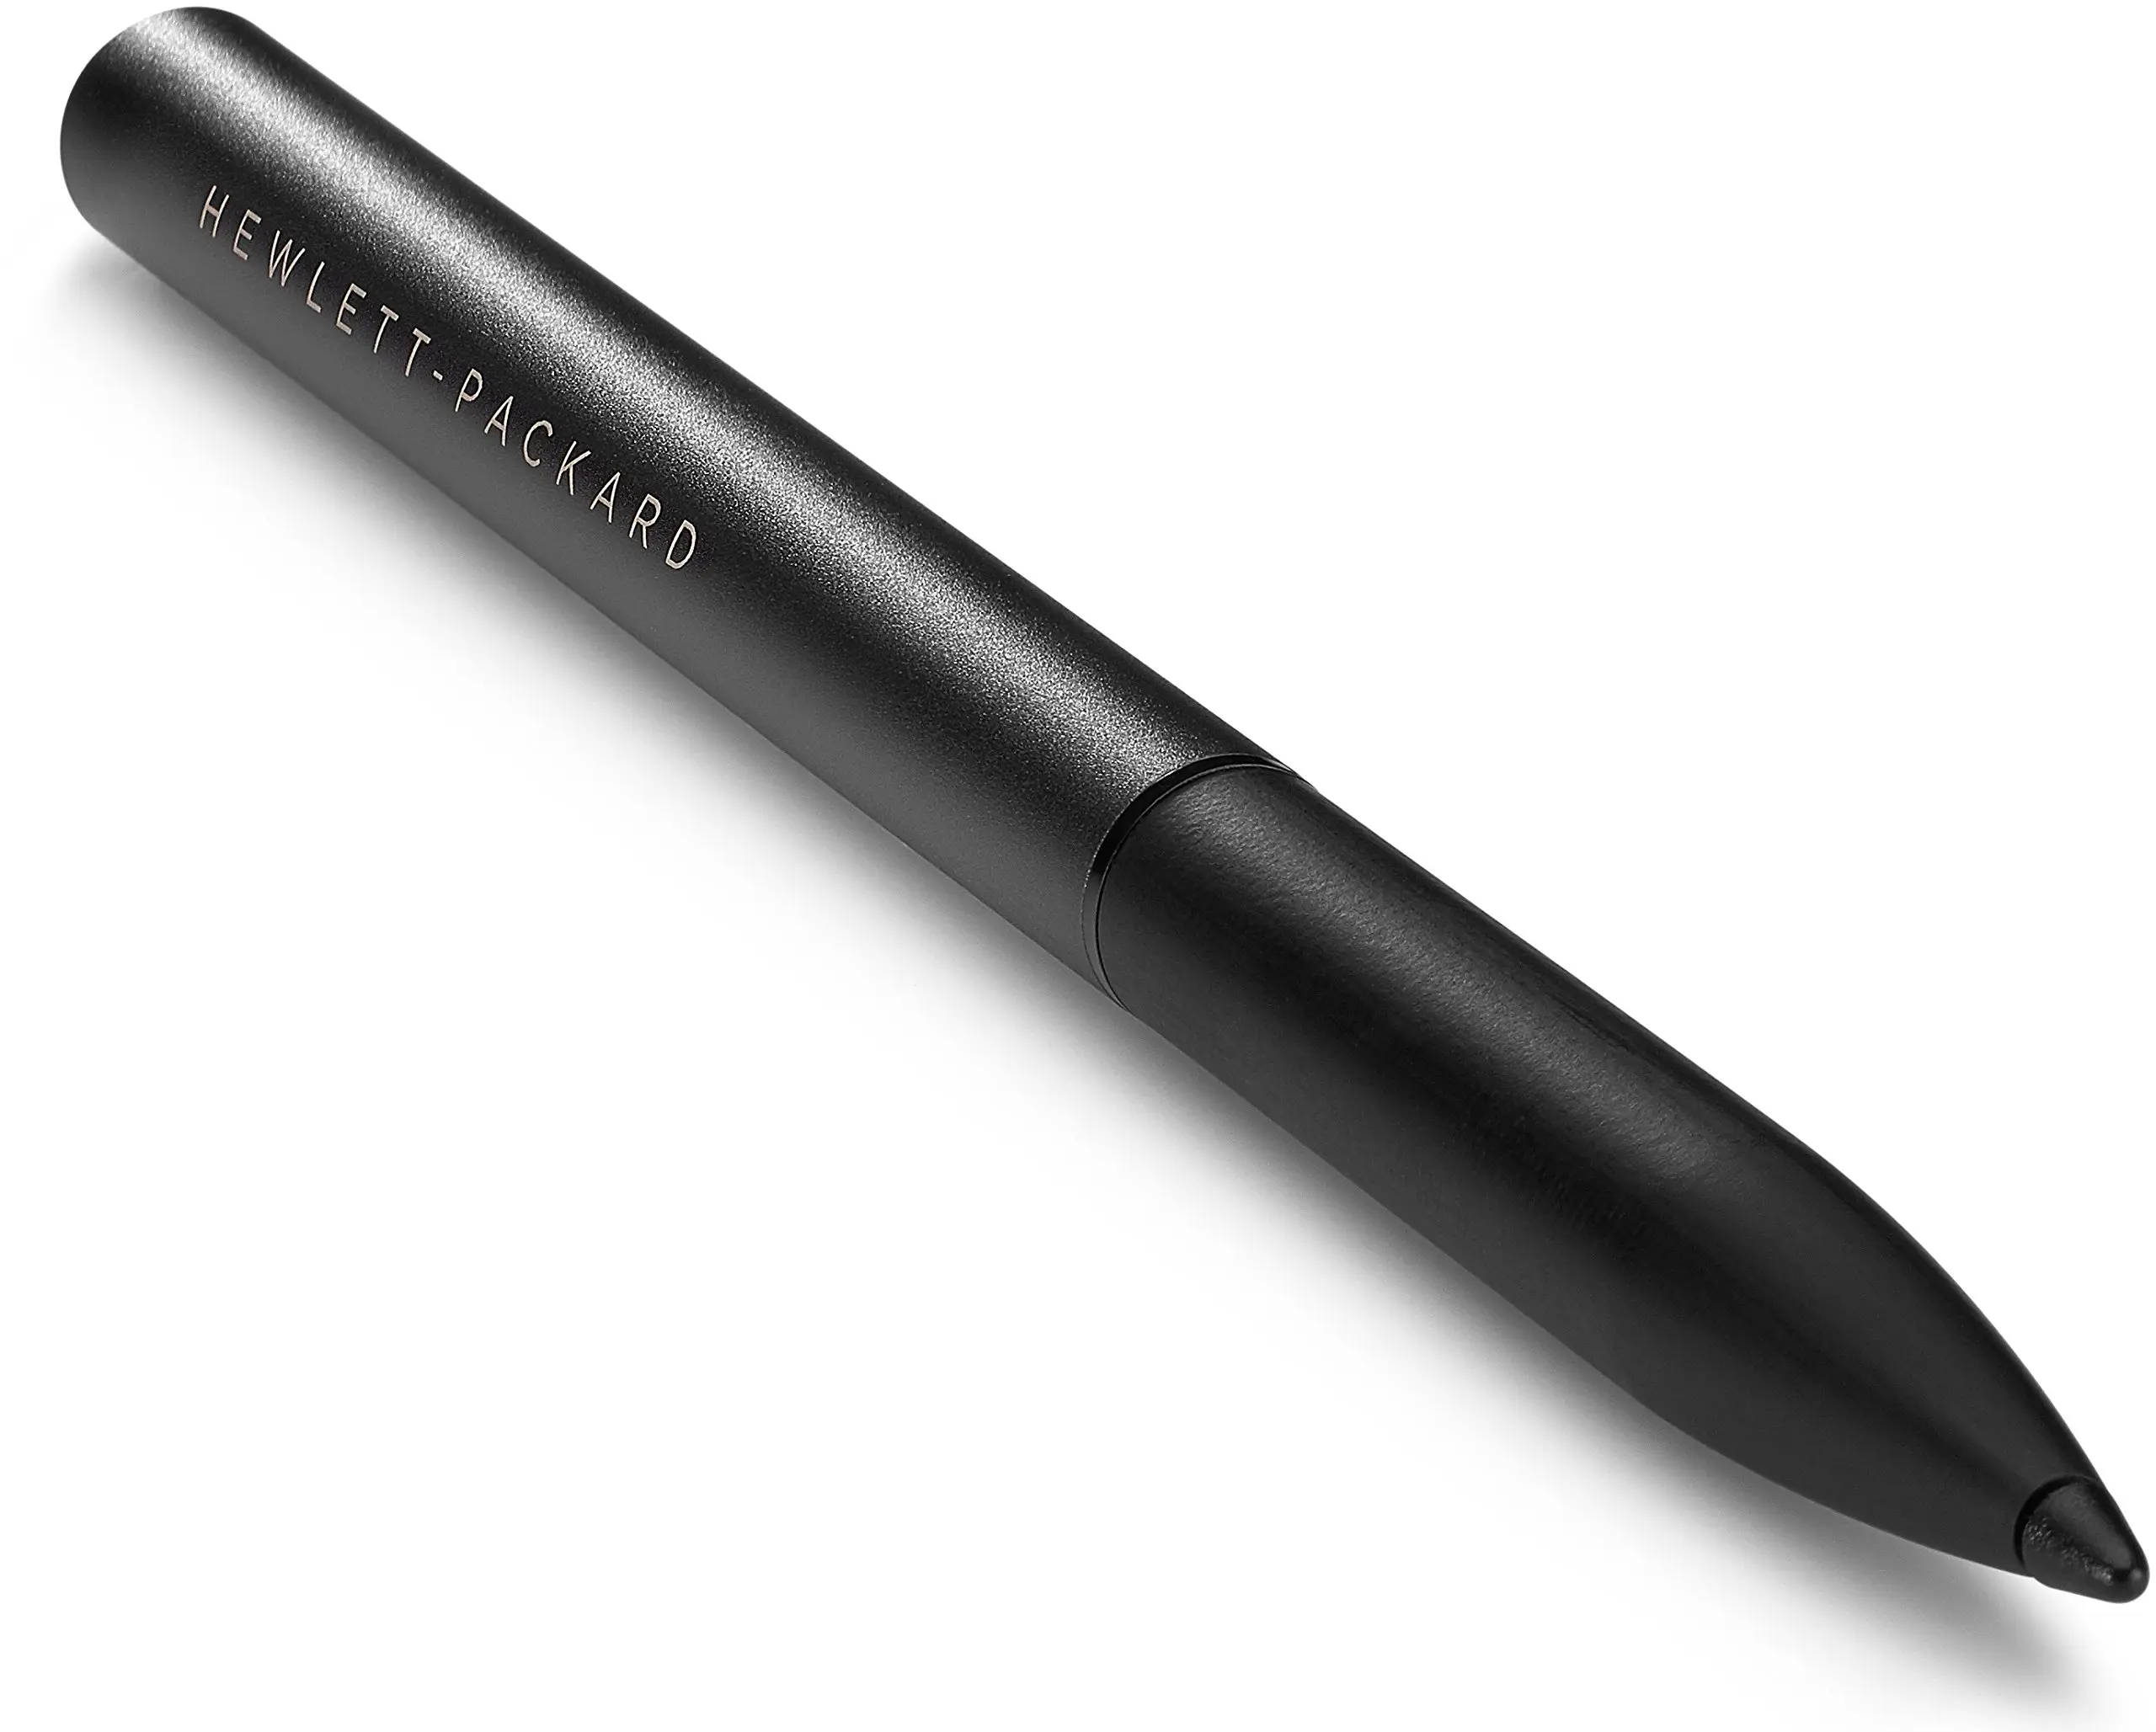 hewlett packard digital pen - How do I connect my digital pen to my laptop